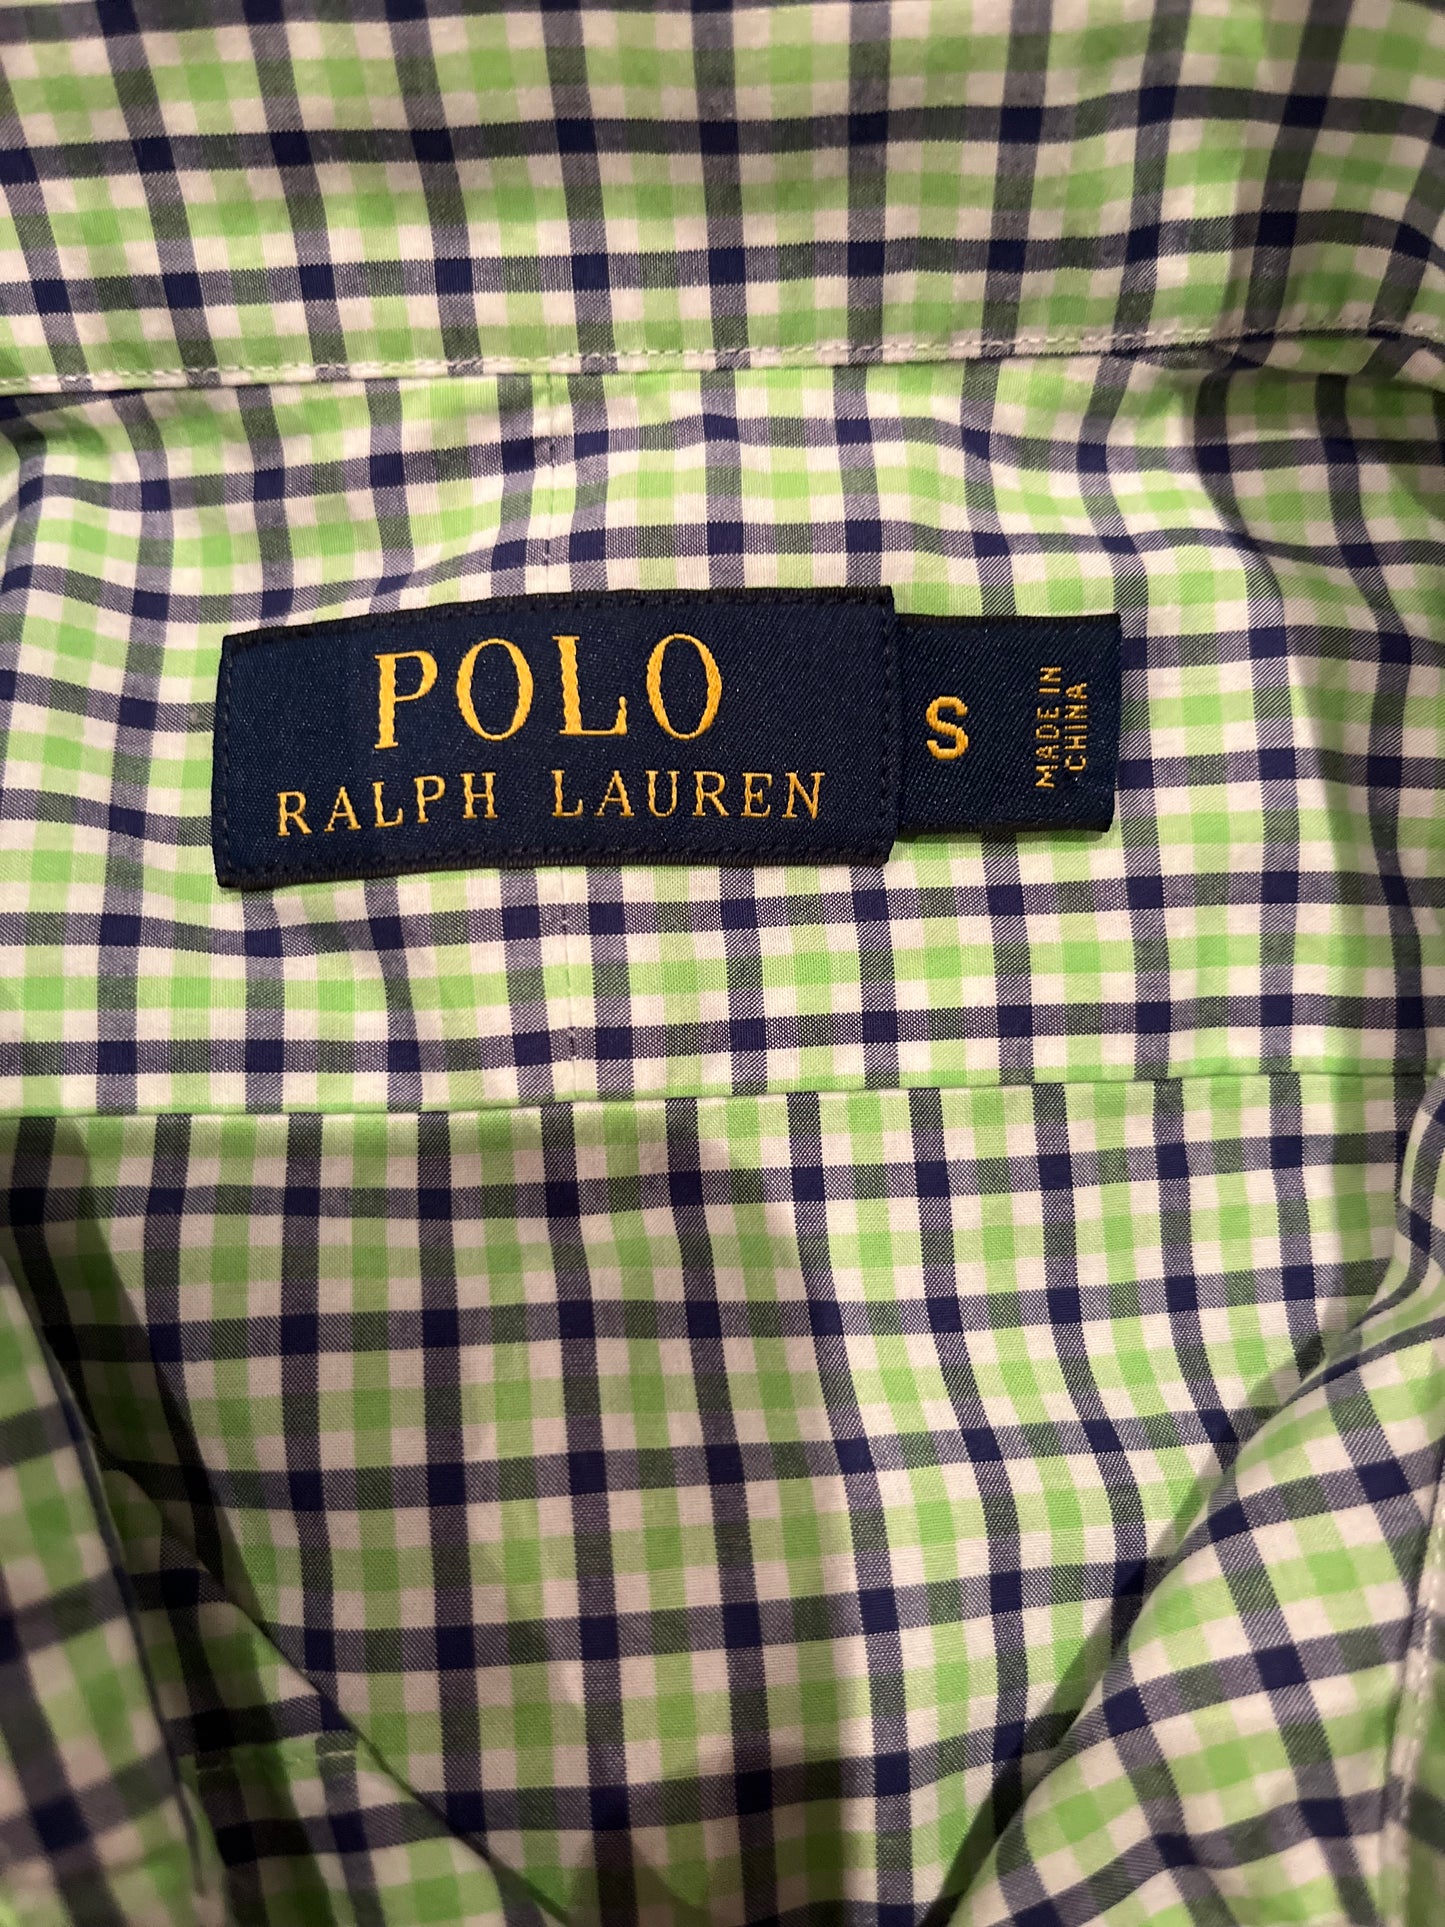 Ralph Lauren 100% Cotton Green Check Shirt Size S Slim Fit